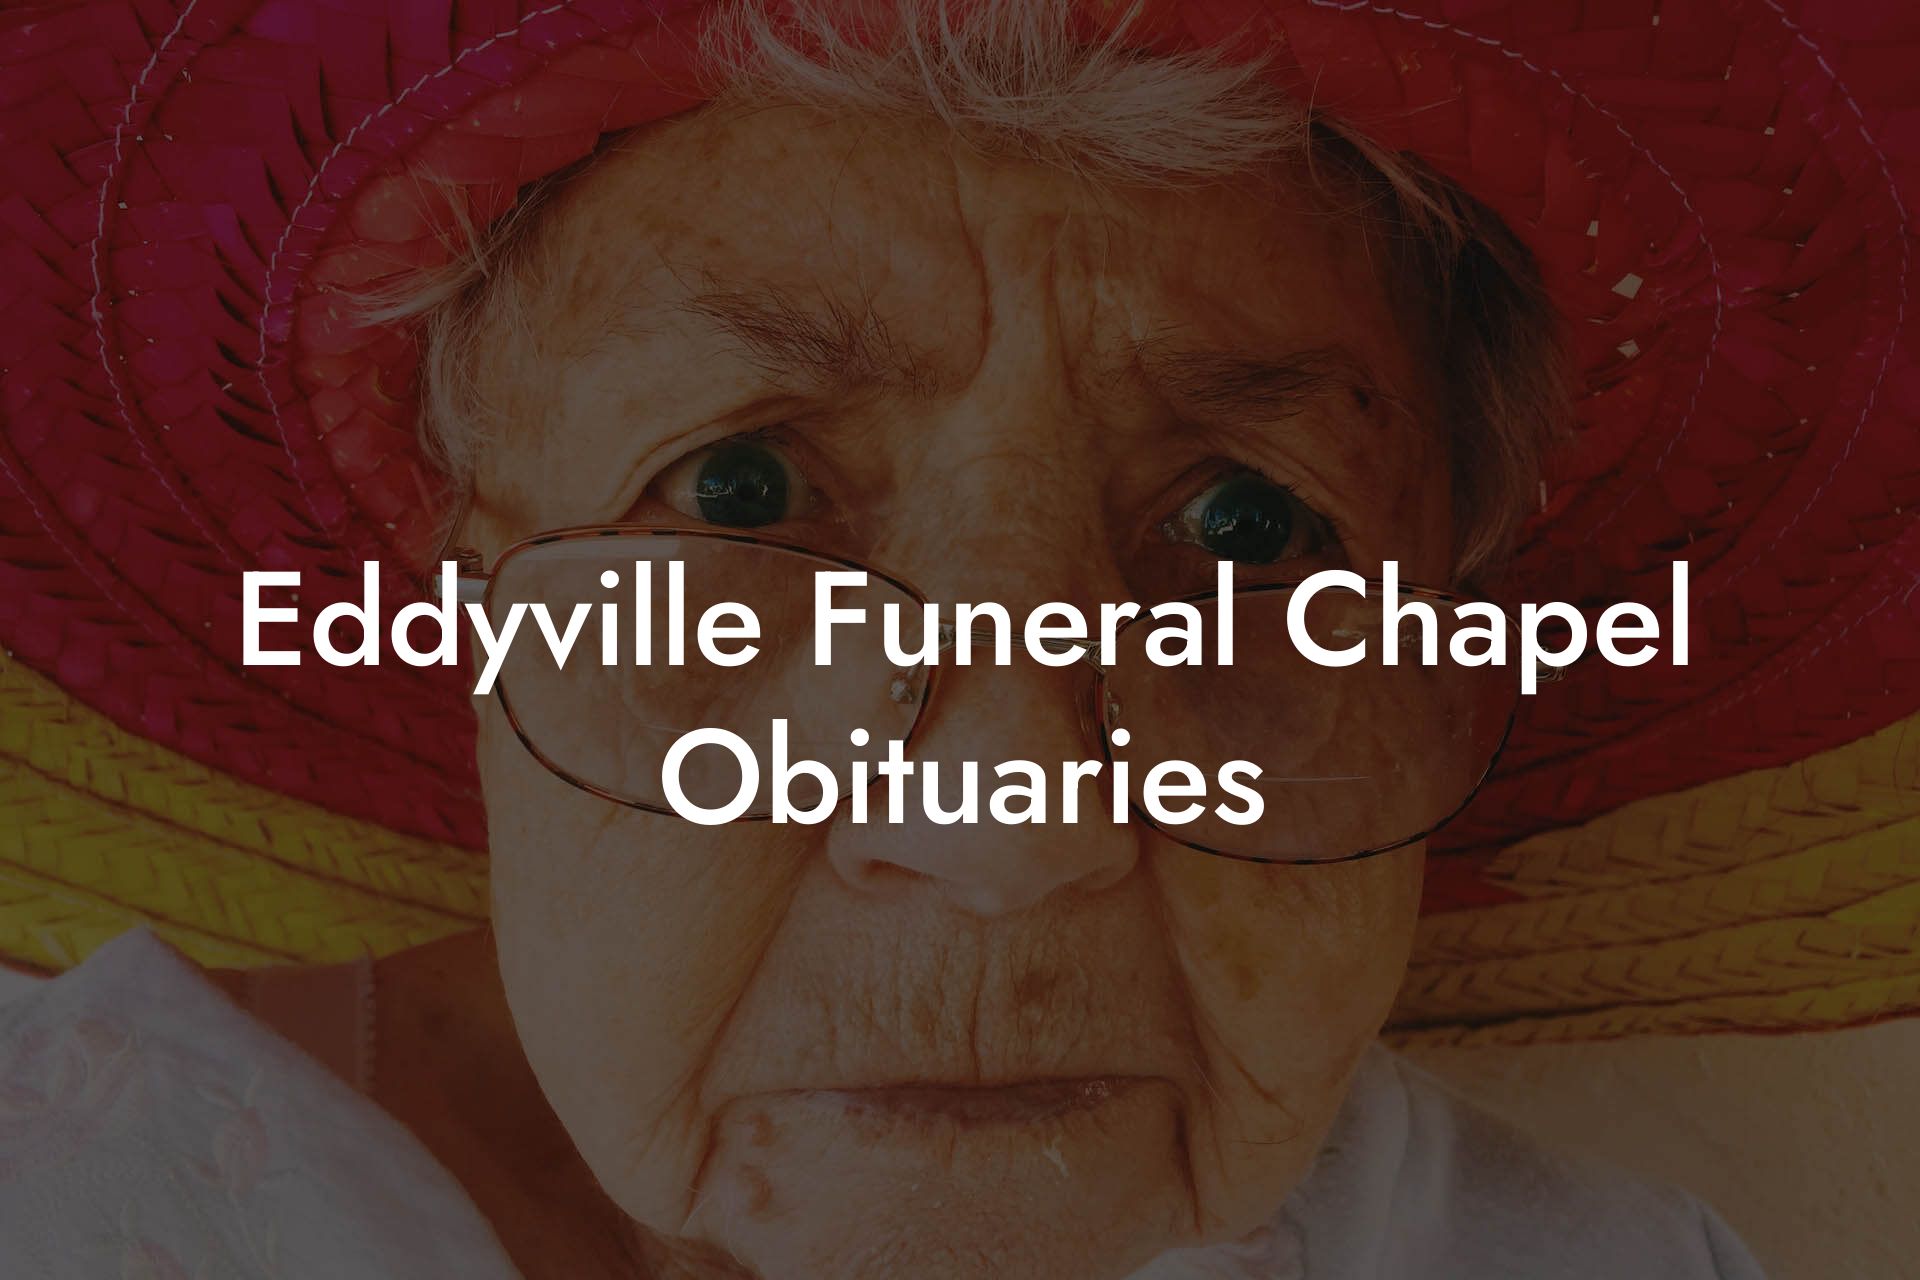 Eddyville Funeral Chapel Obituaries